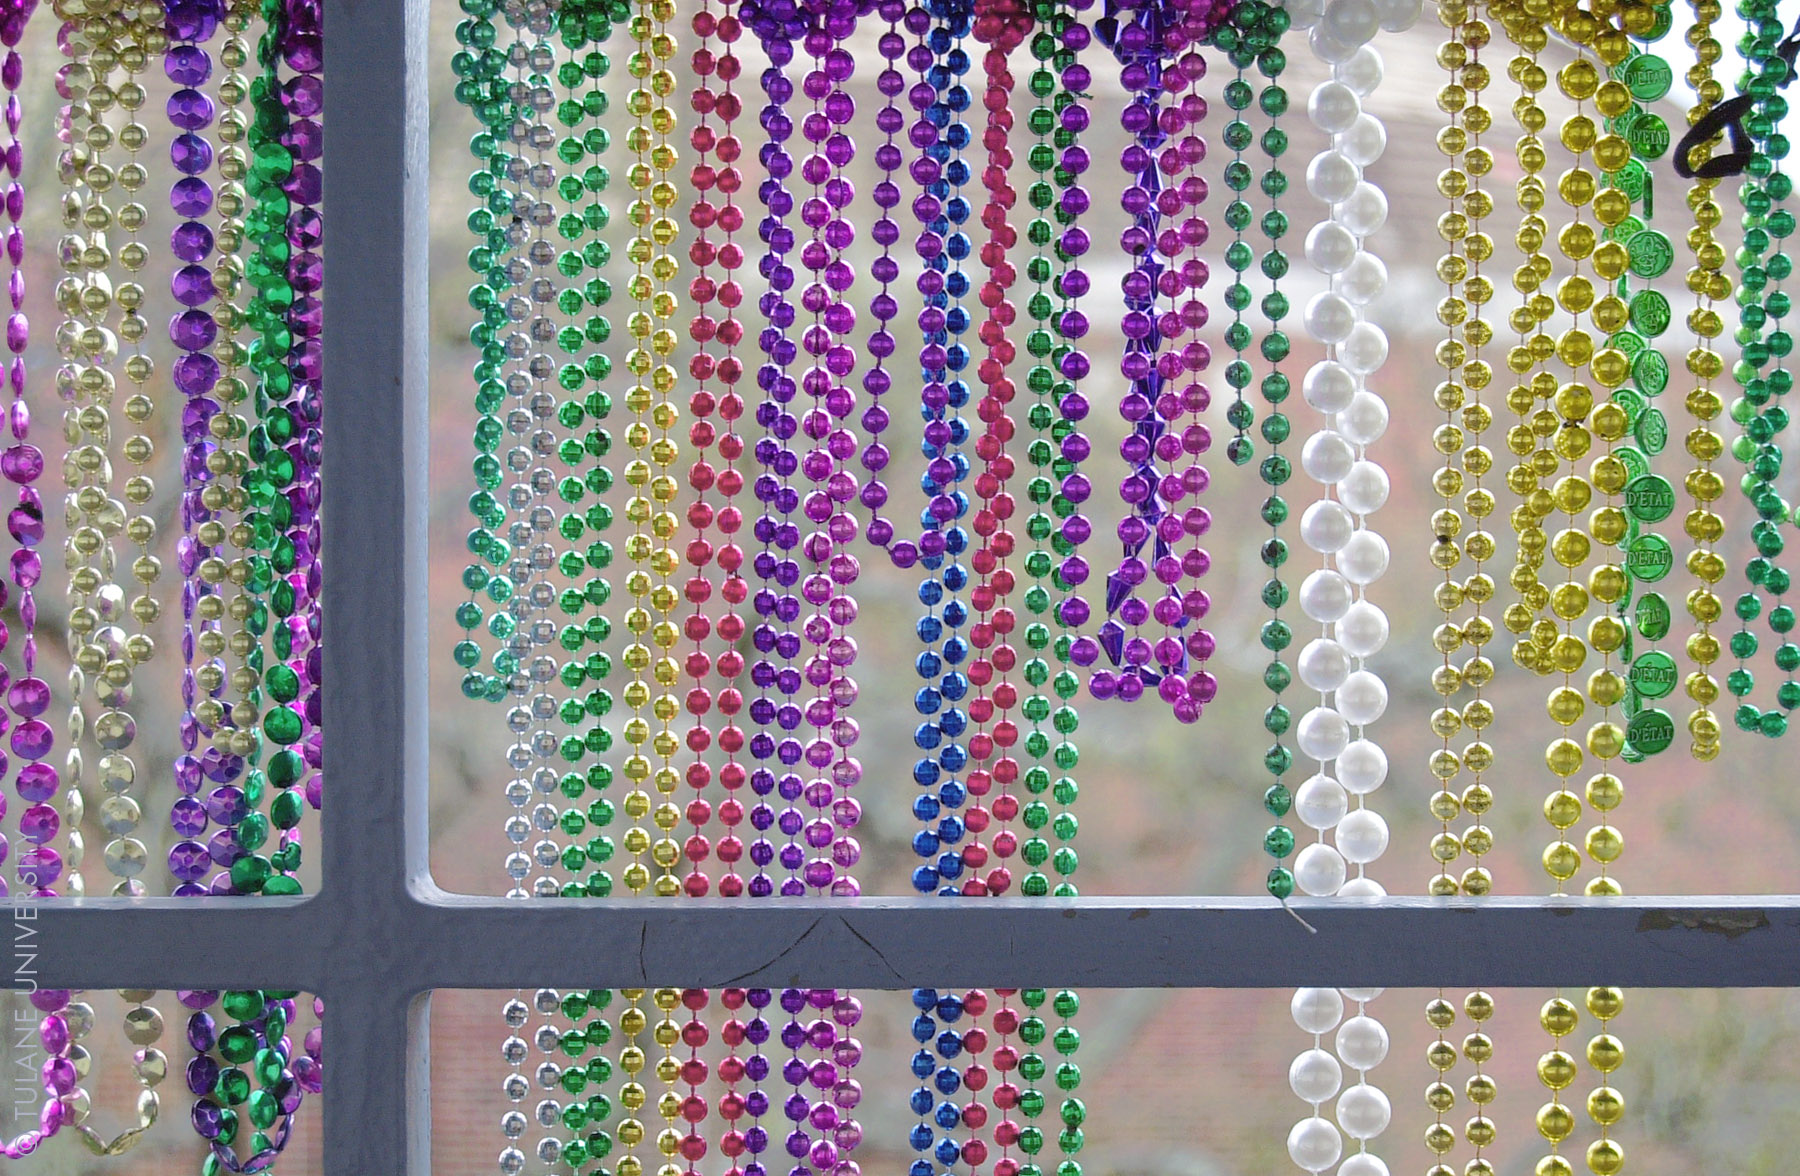 IMAGE: Mardi Gras Beads On Balcony